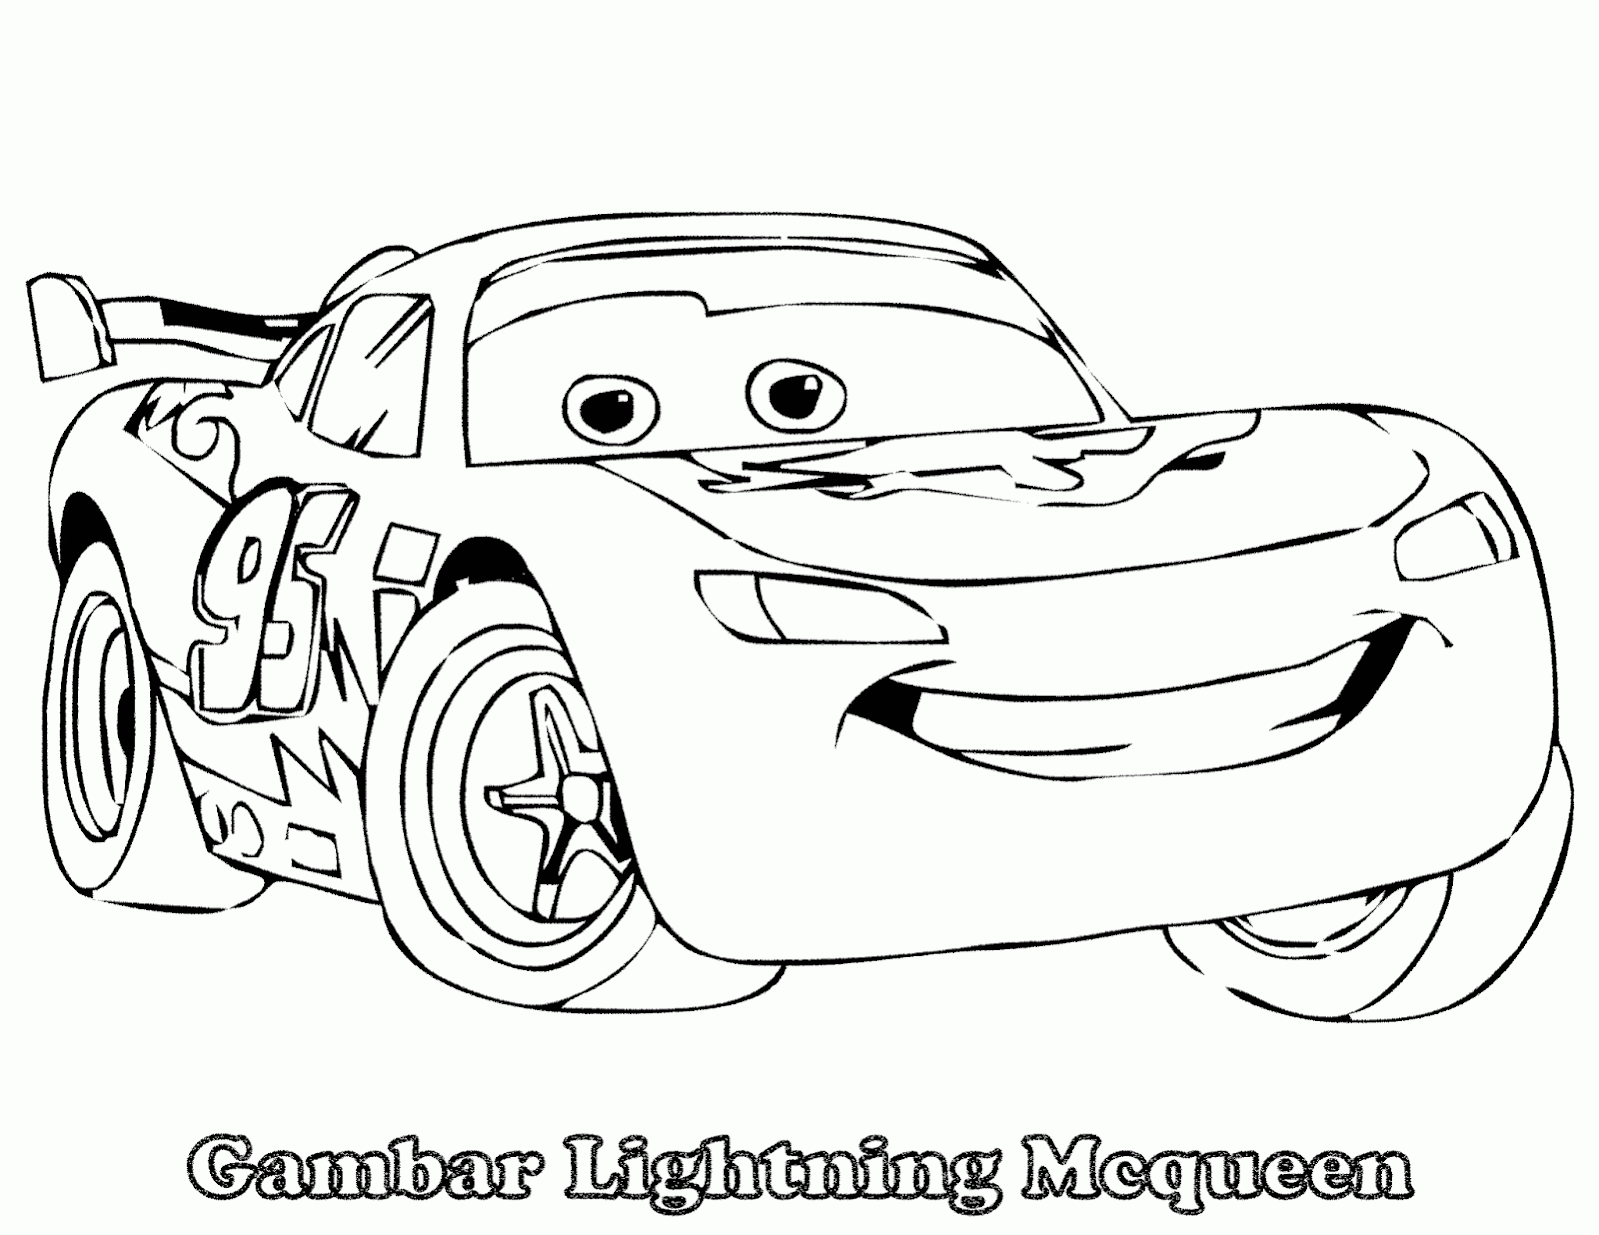 Mewarnai Gambar Lightning Mcqueen,Tokoh Film Cars - Contoh 